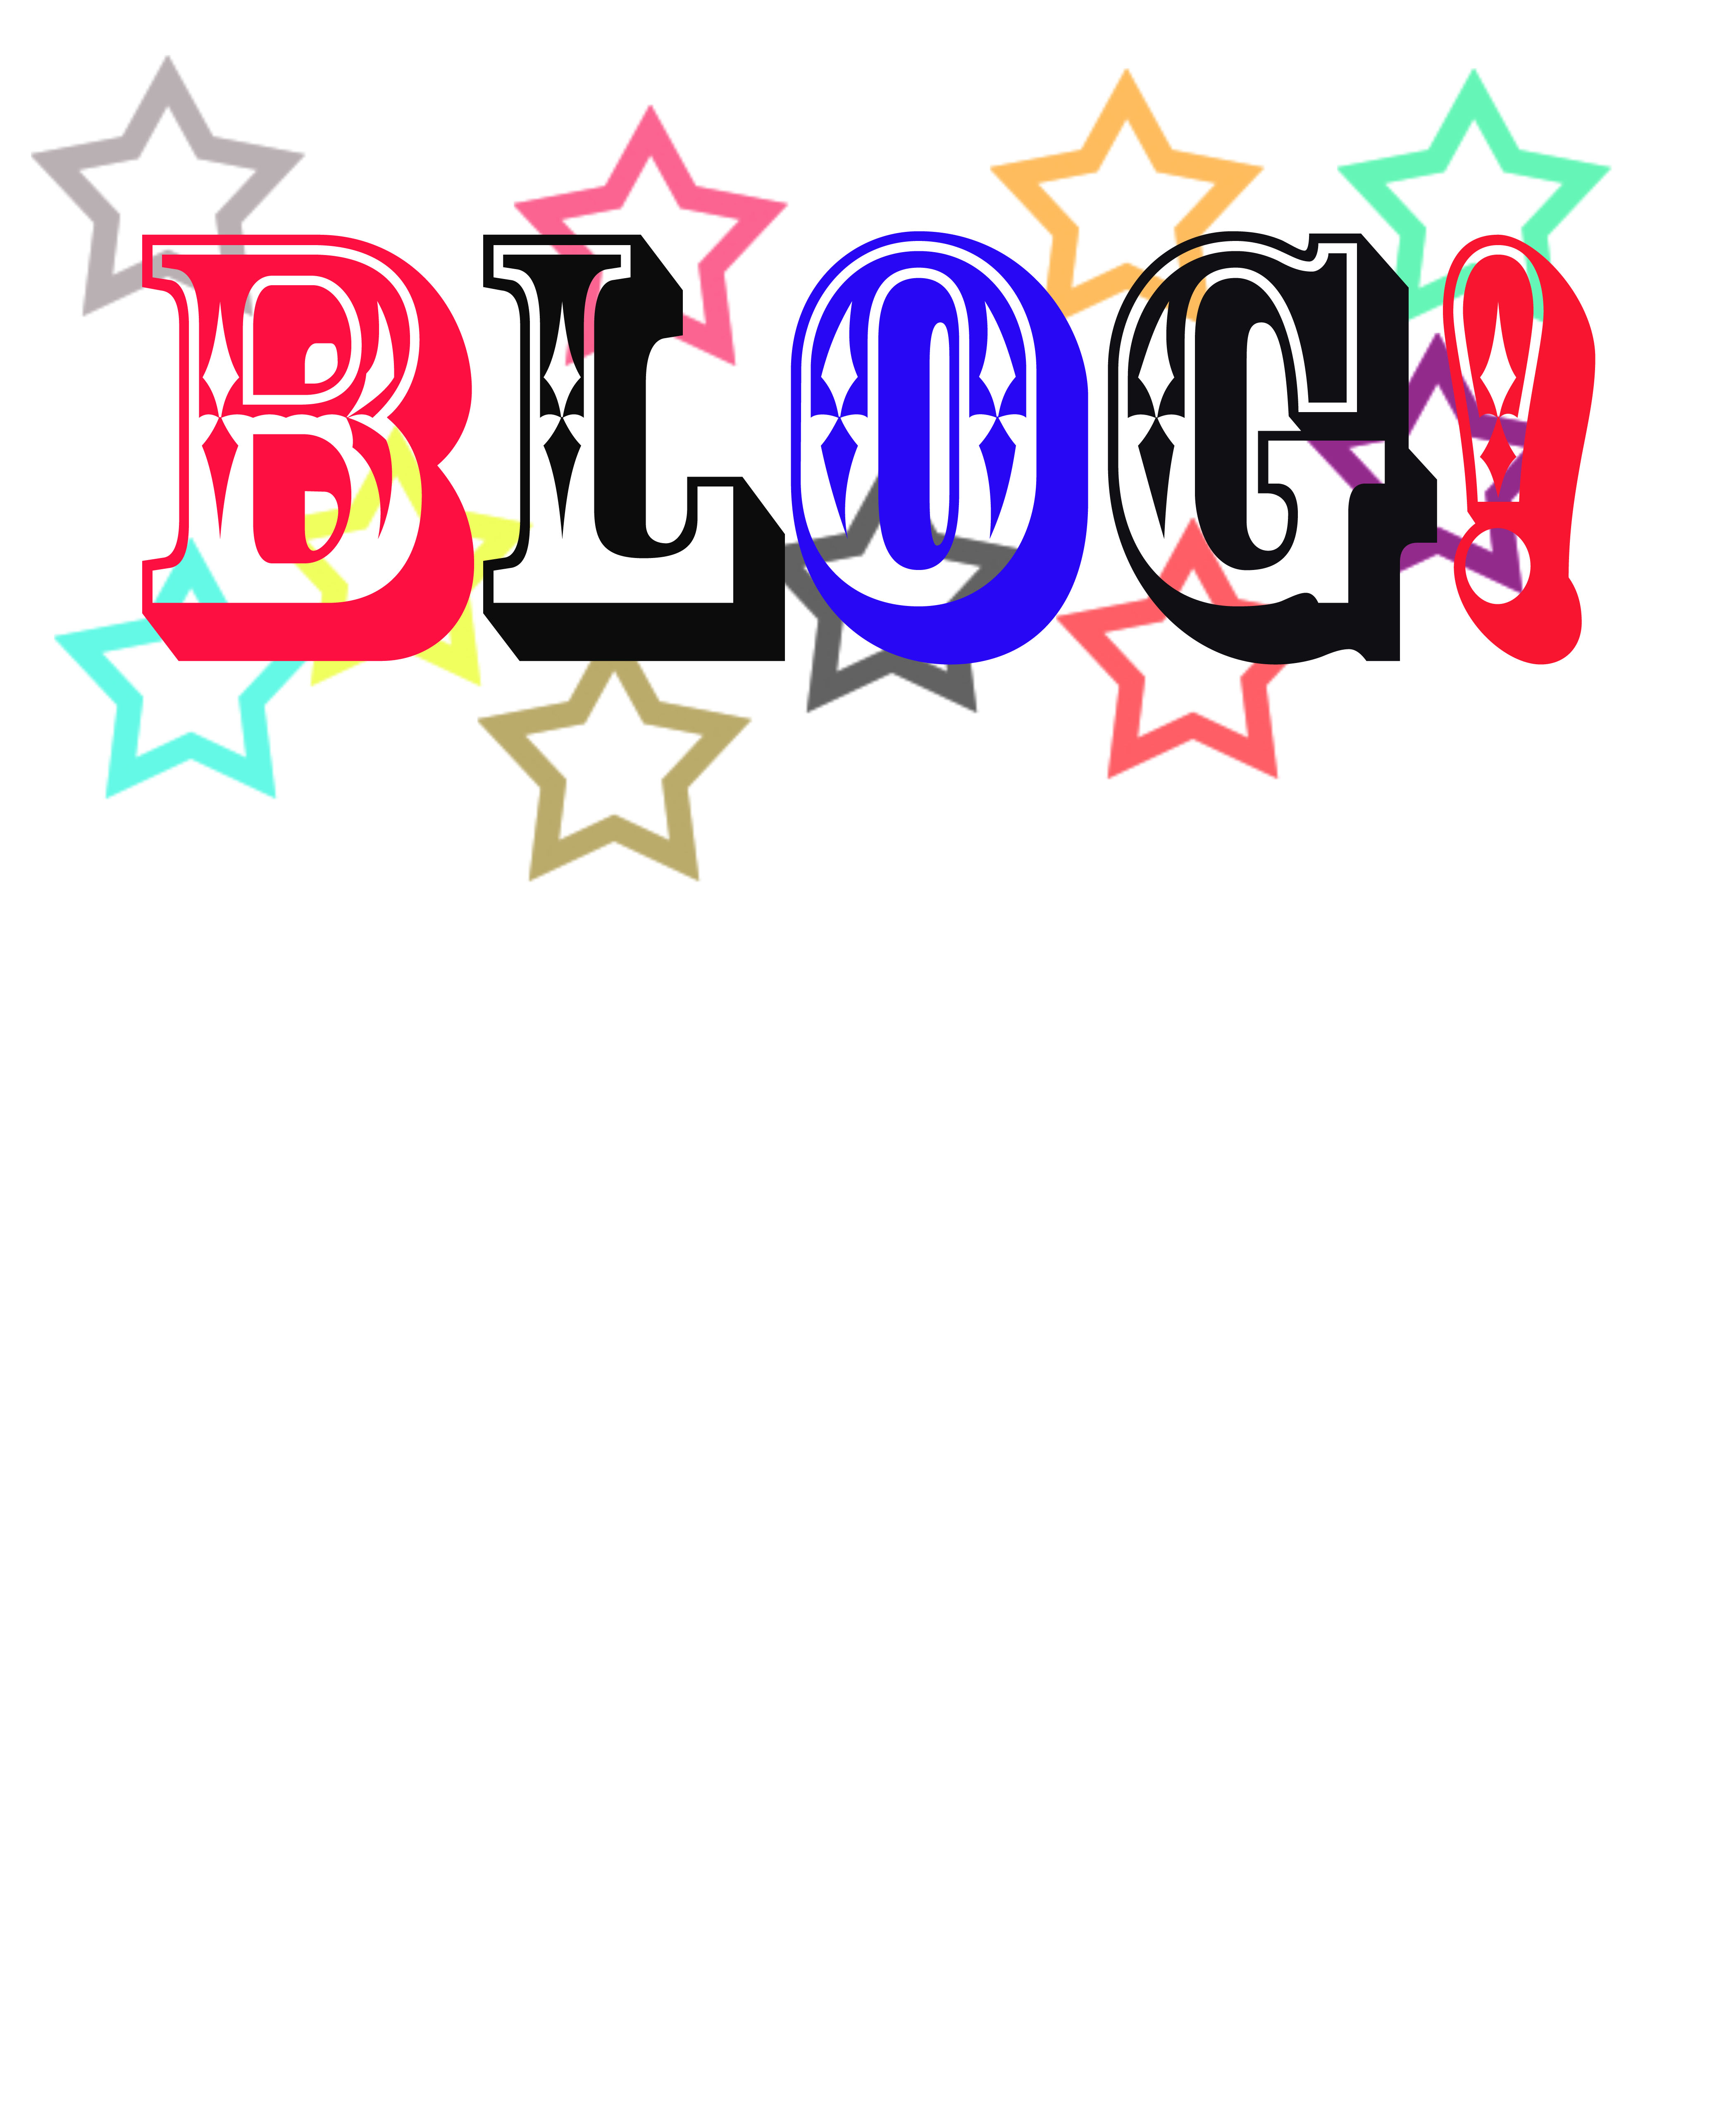 P.S blog logo